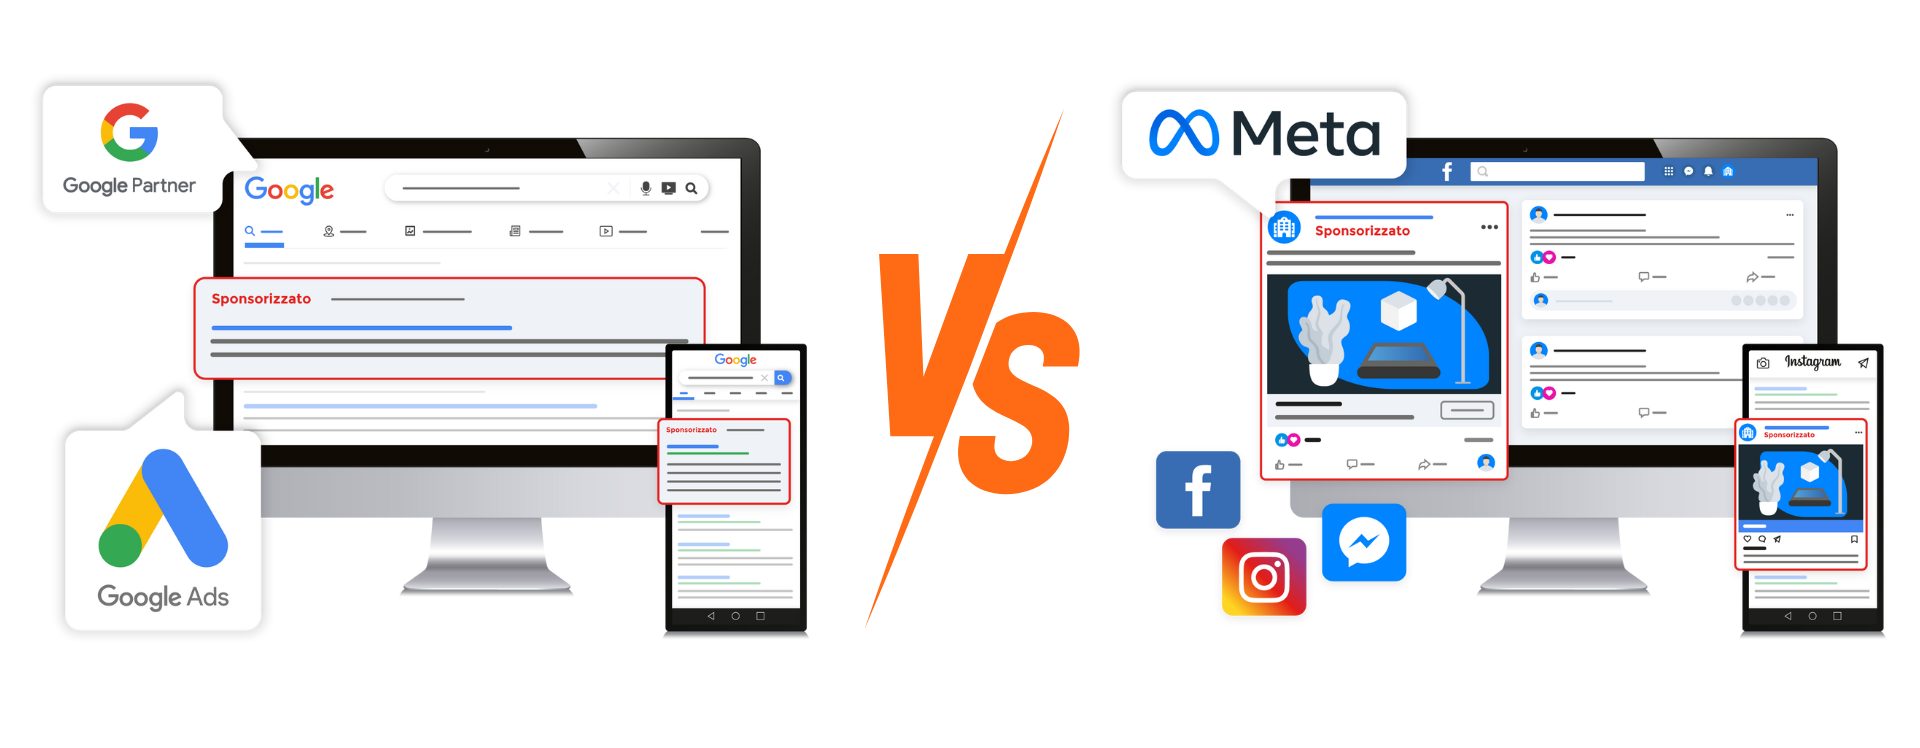 Differenze tra le campagne Meta Ads e Google Ads